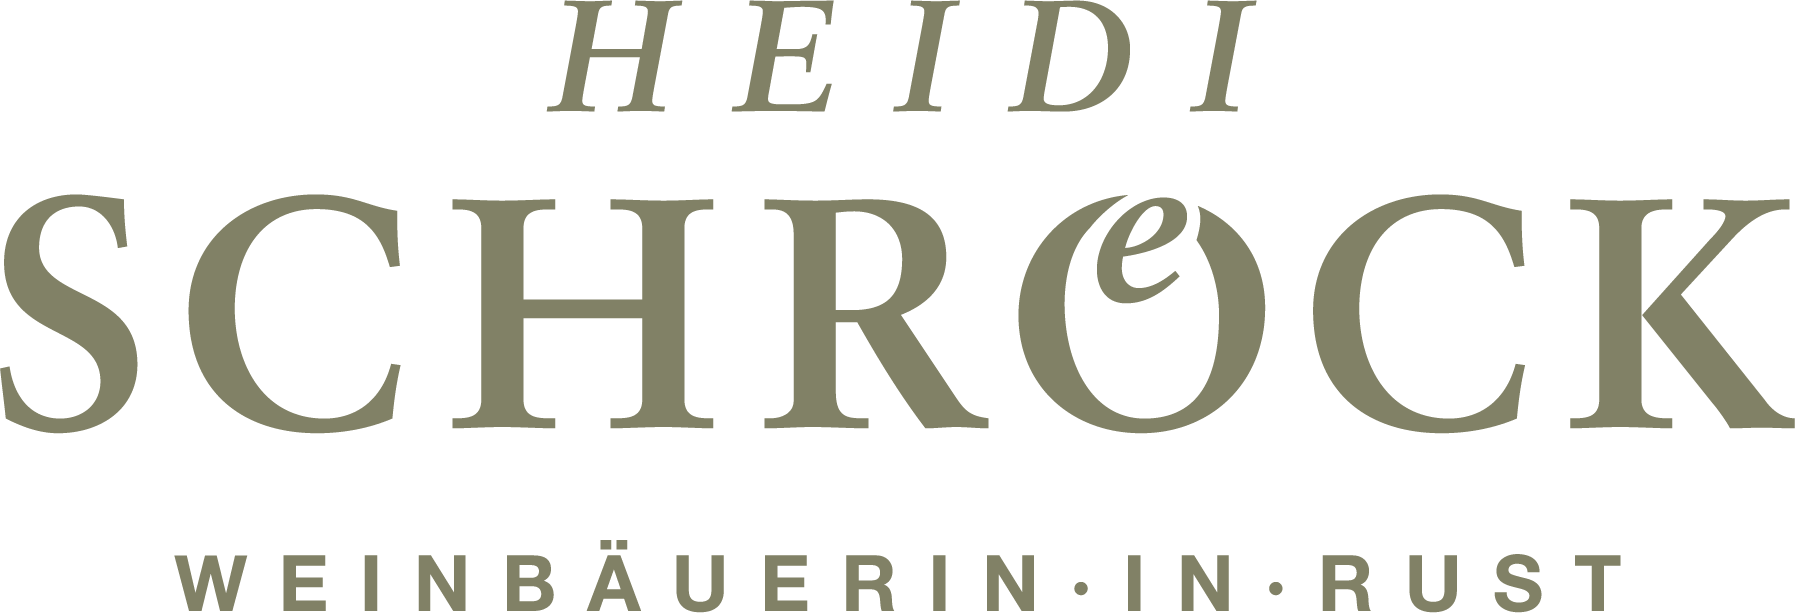 Heidi Schoeck logo